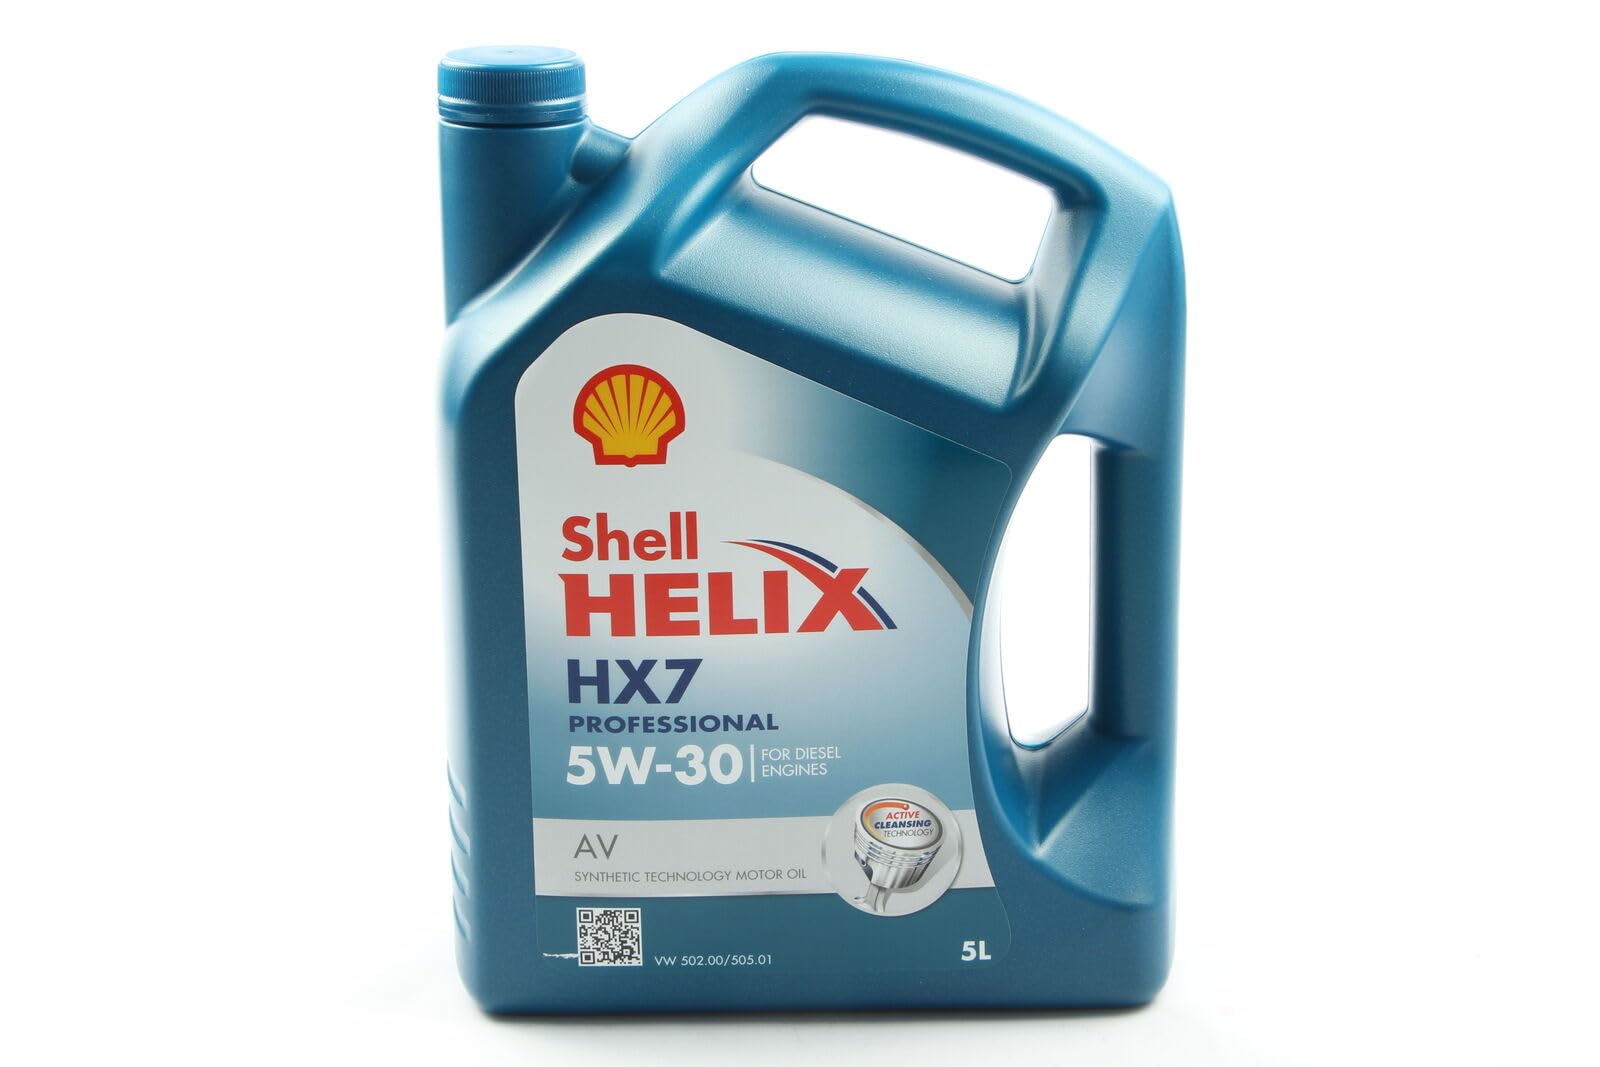 Shell Helix HX7 Professional AV 5W30 Motorenöl, 5L von Shell